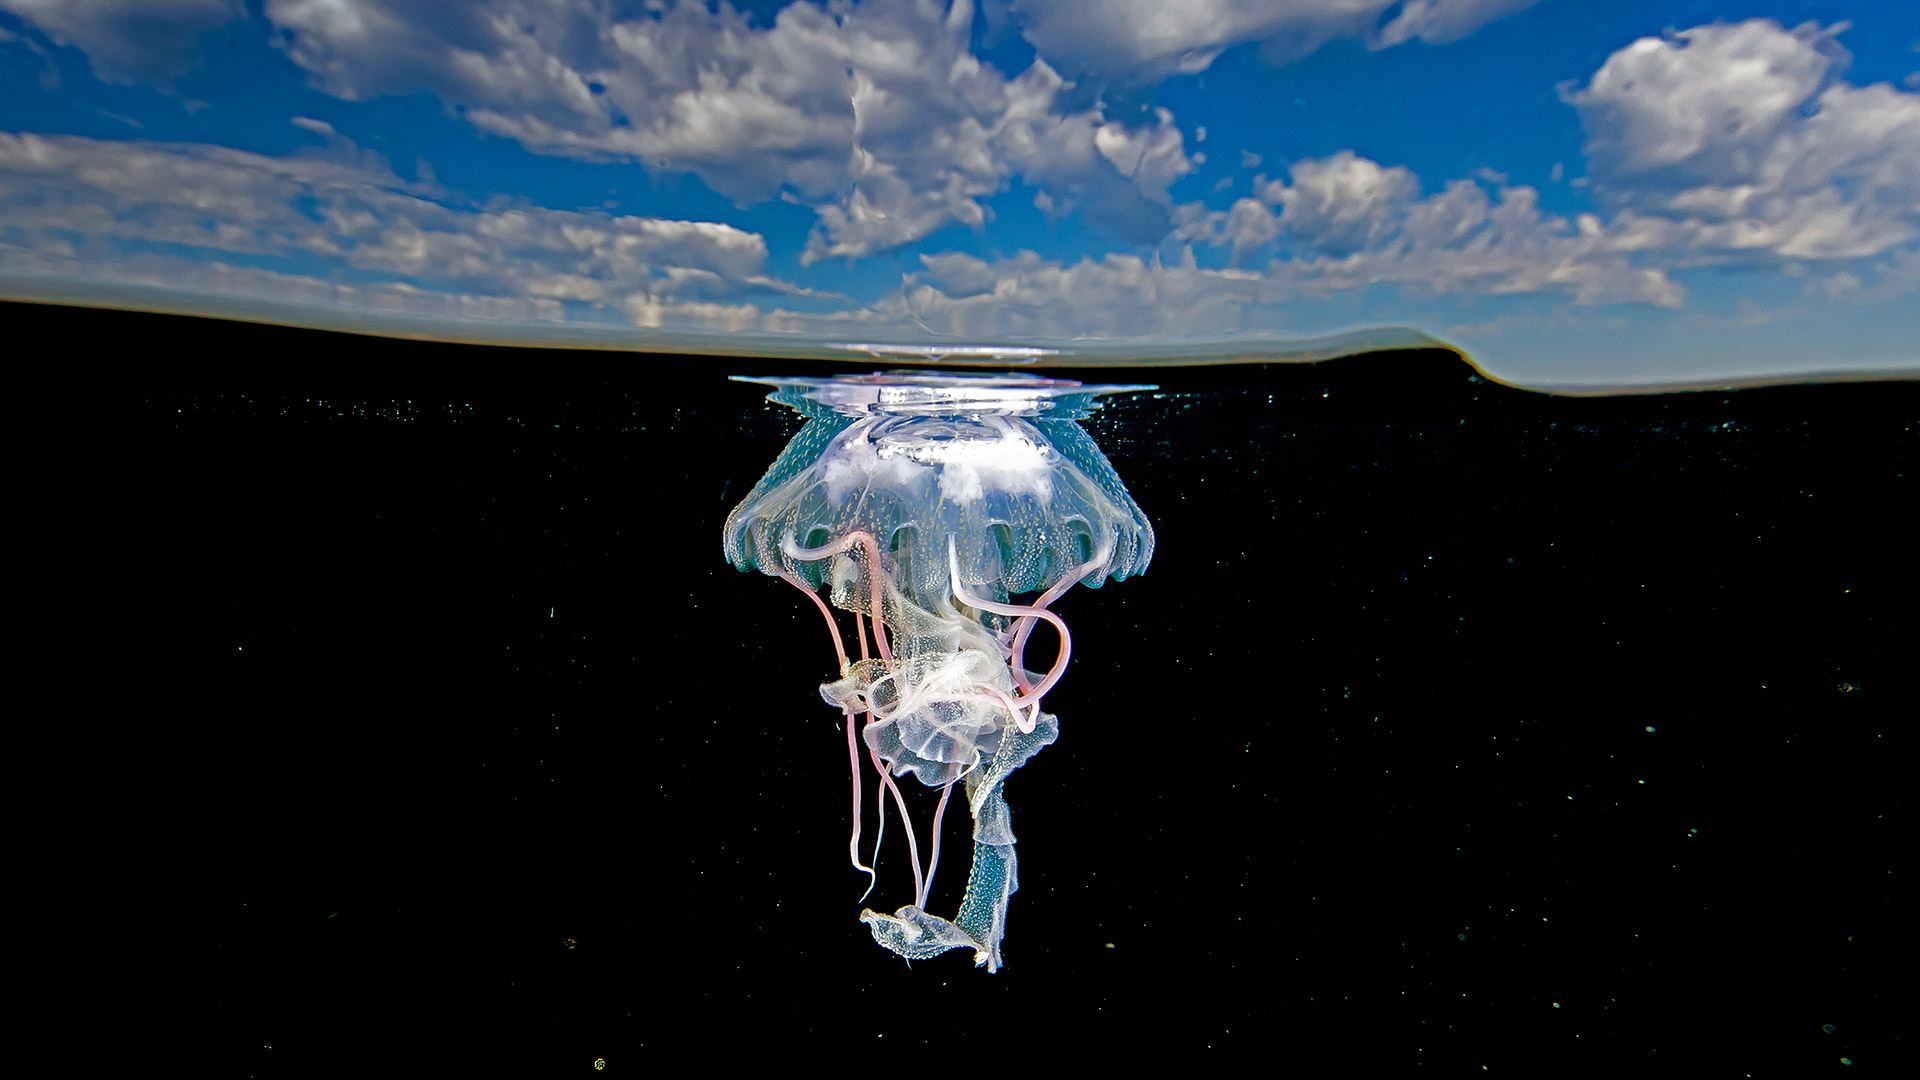 Ixtapa Jellyfish